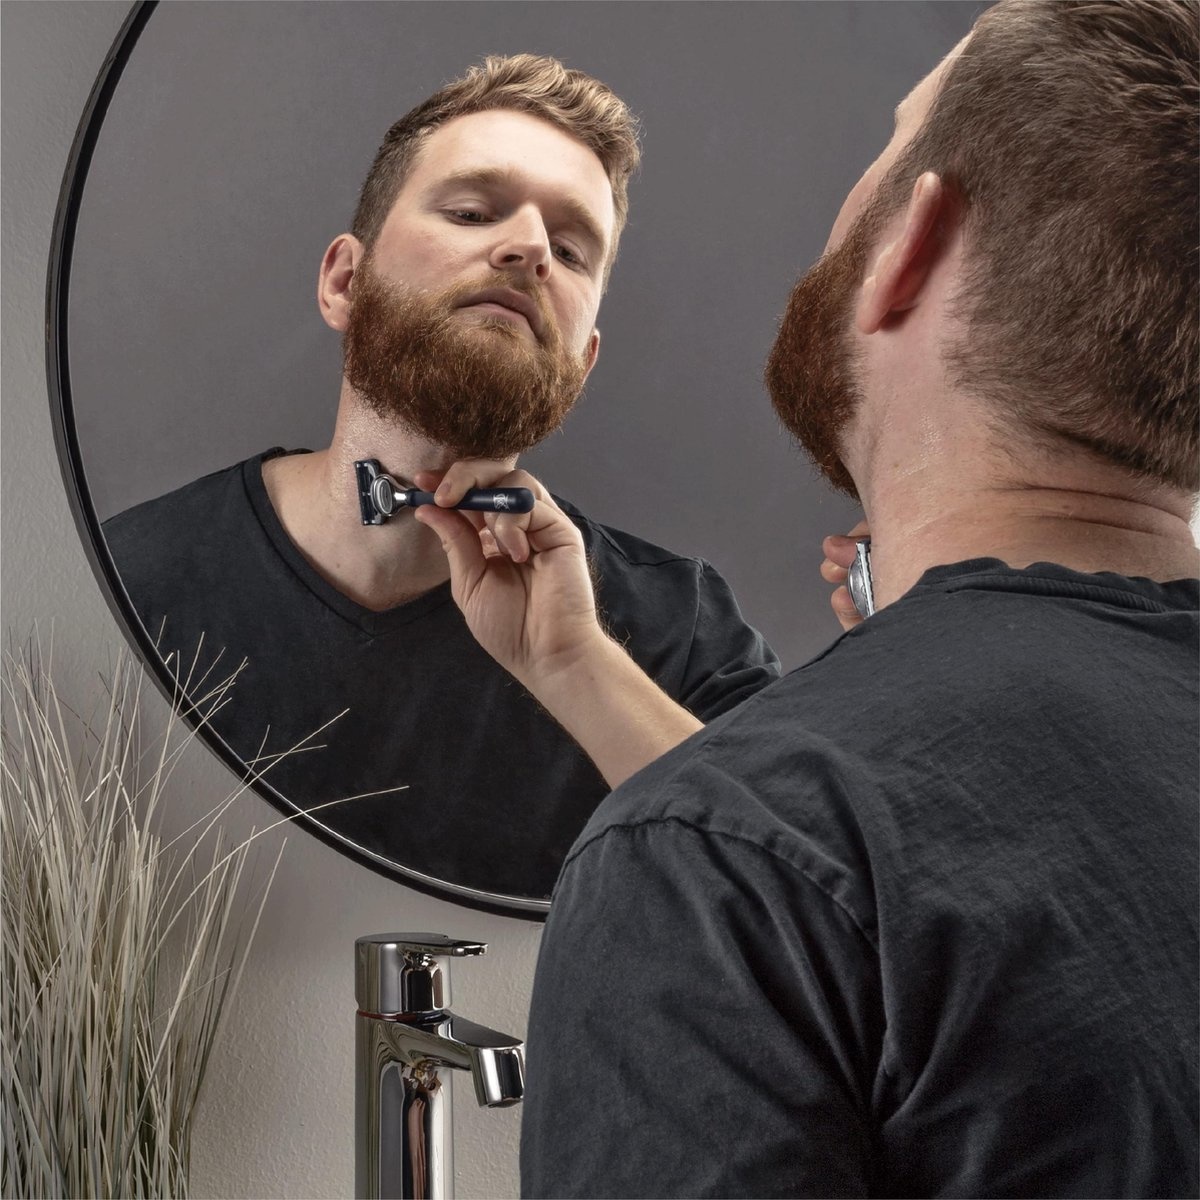 King C. Gillette Face and Contour Men's Shaving System